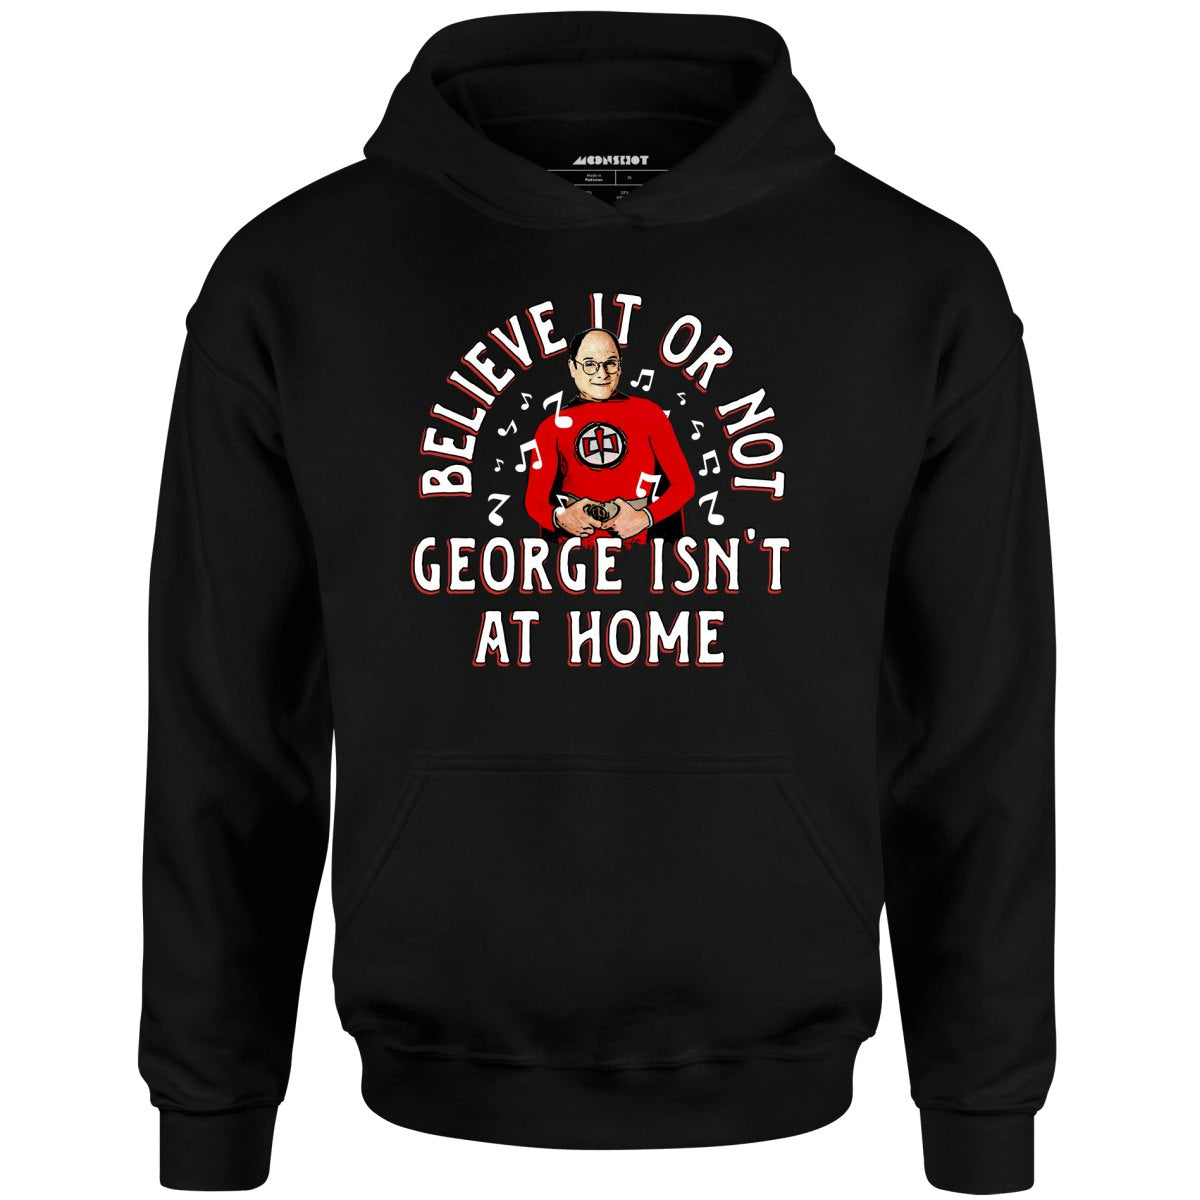 Believe It Or Not George Isn't at Home - Unisex Hoodie